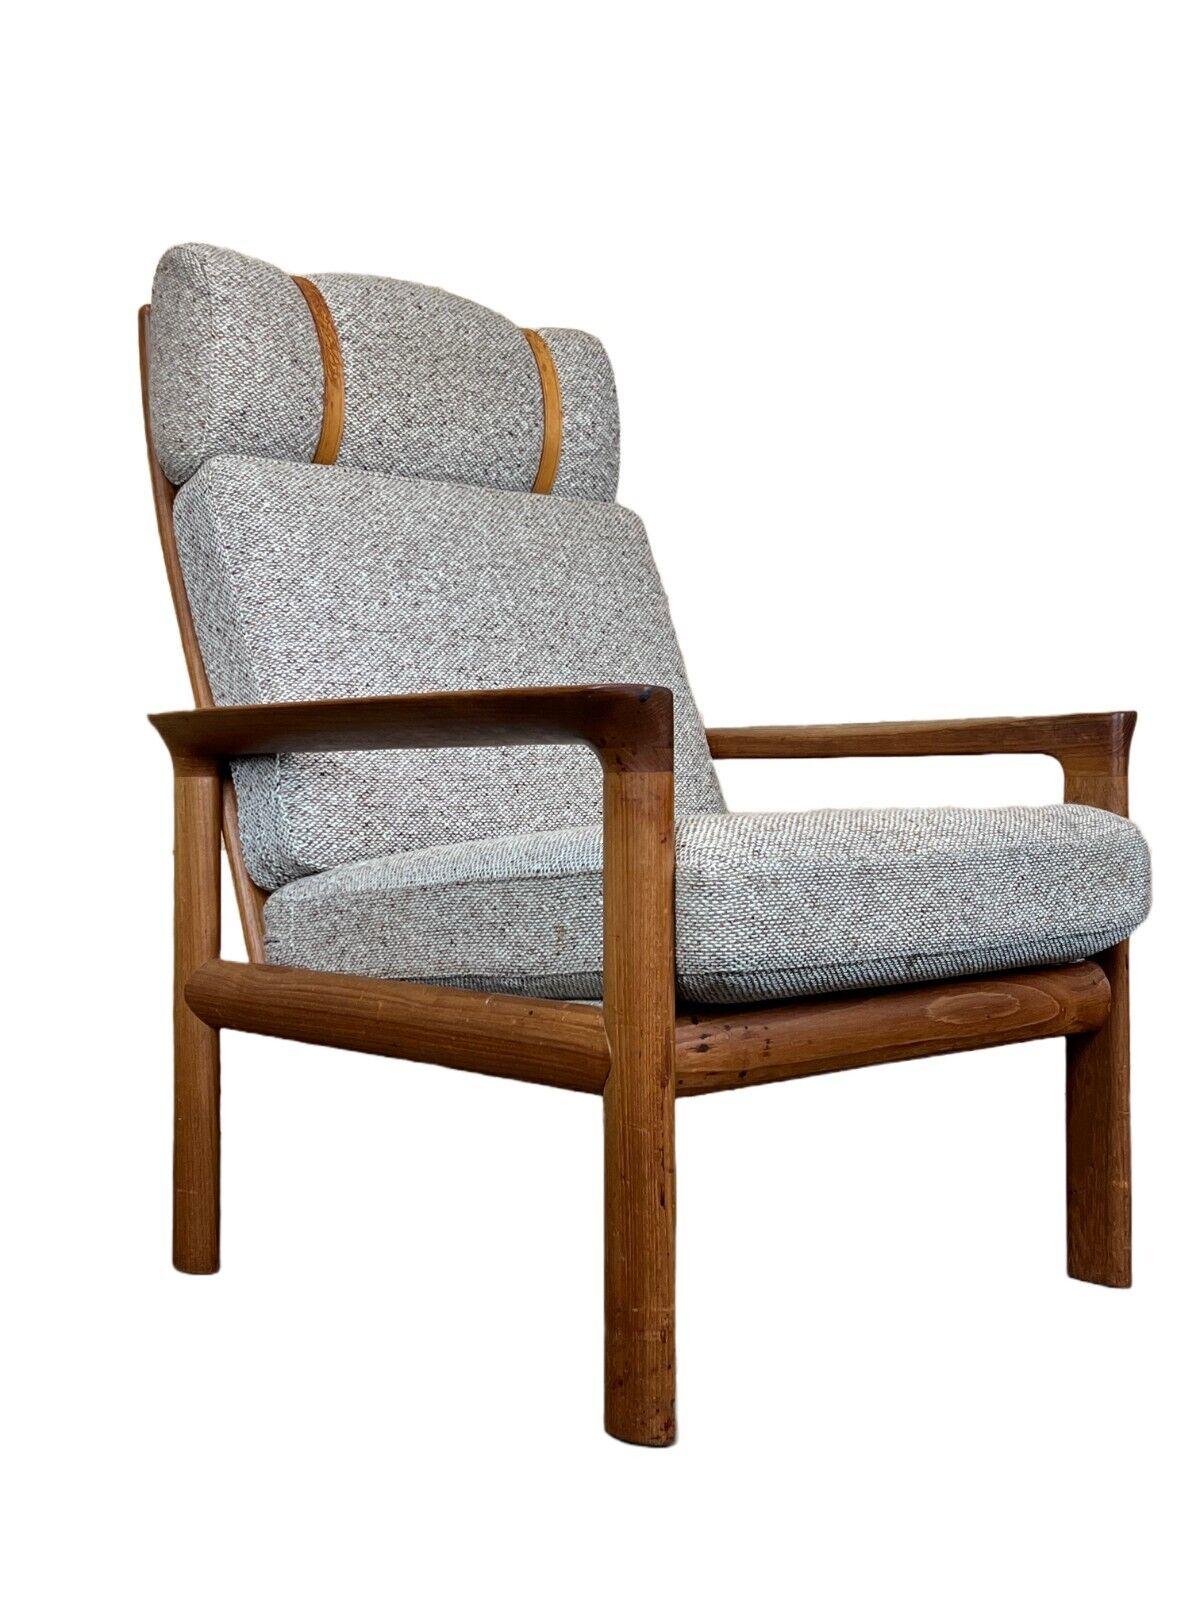 60s 70s Teak Easy Chair Sven Ellekaer for Komfort Design Denmark

Object: Easy Chair

Manufacturer: Comfort

Condition: good - vintage

Age: around 1960-1970

Dimensions:

Width = 76cm
Depth = 88cm
Height = 105cm
Seat height = 45cm

Other